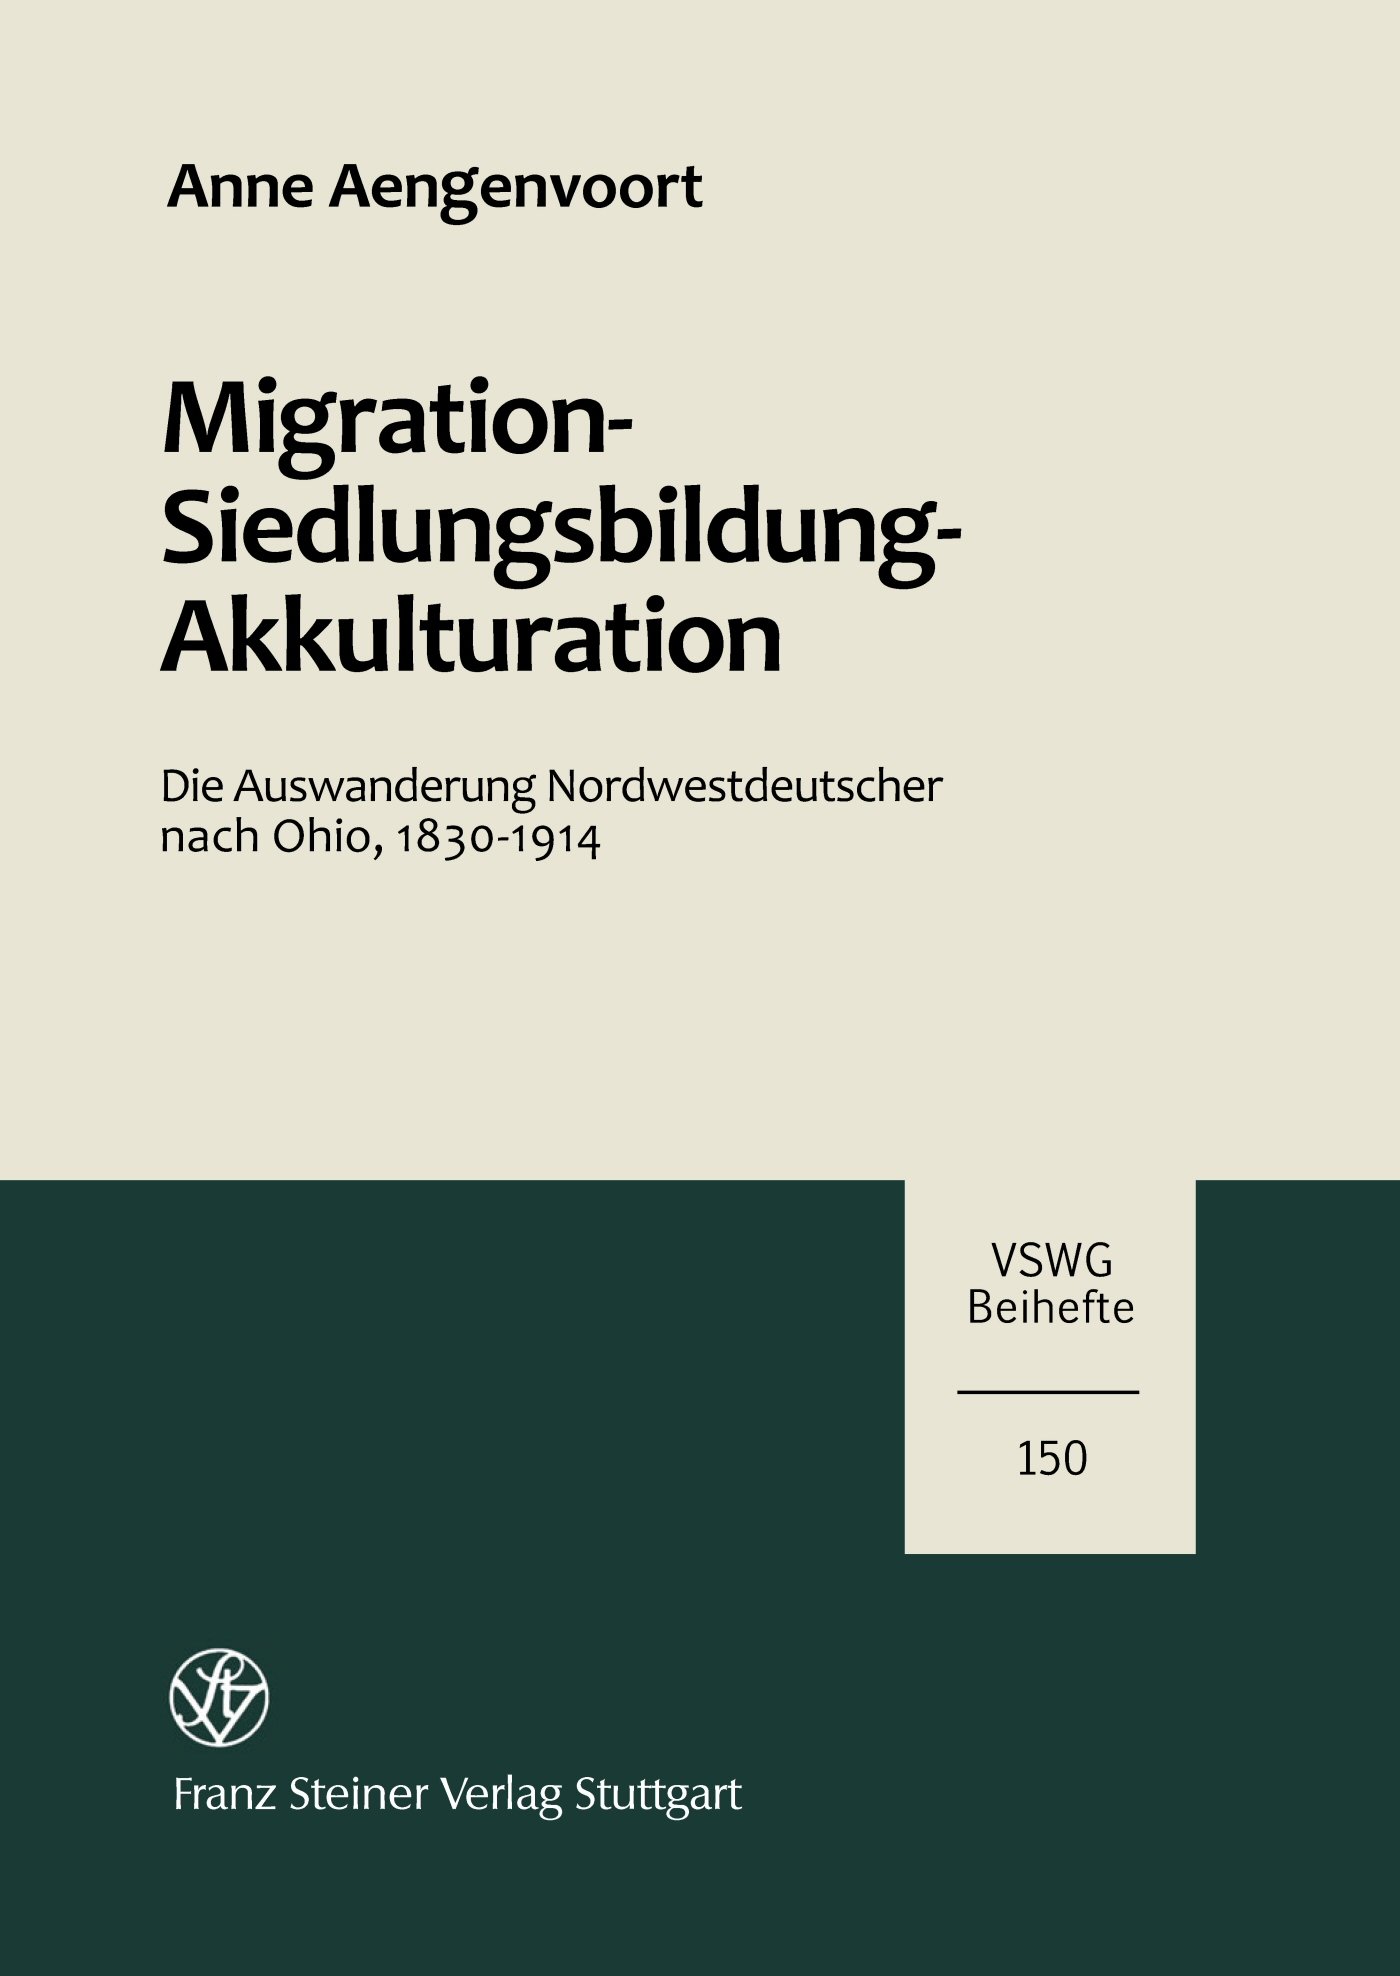 Migration – Siedlungsbildung – Akkulturation